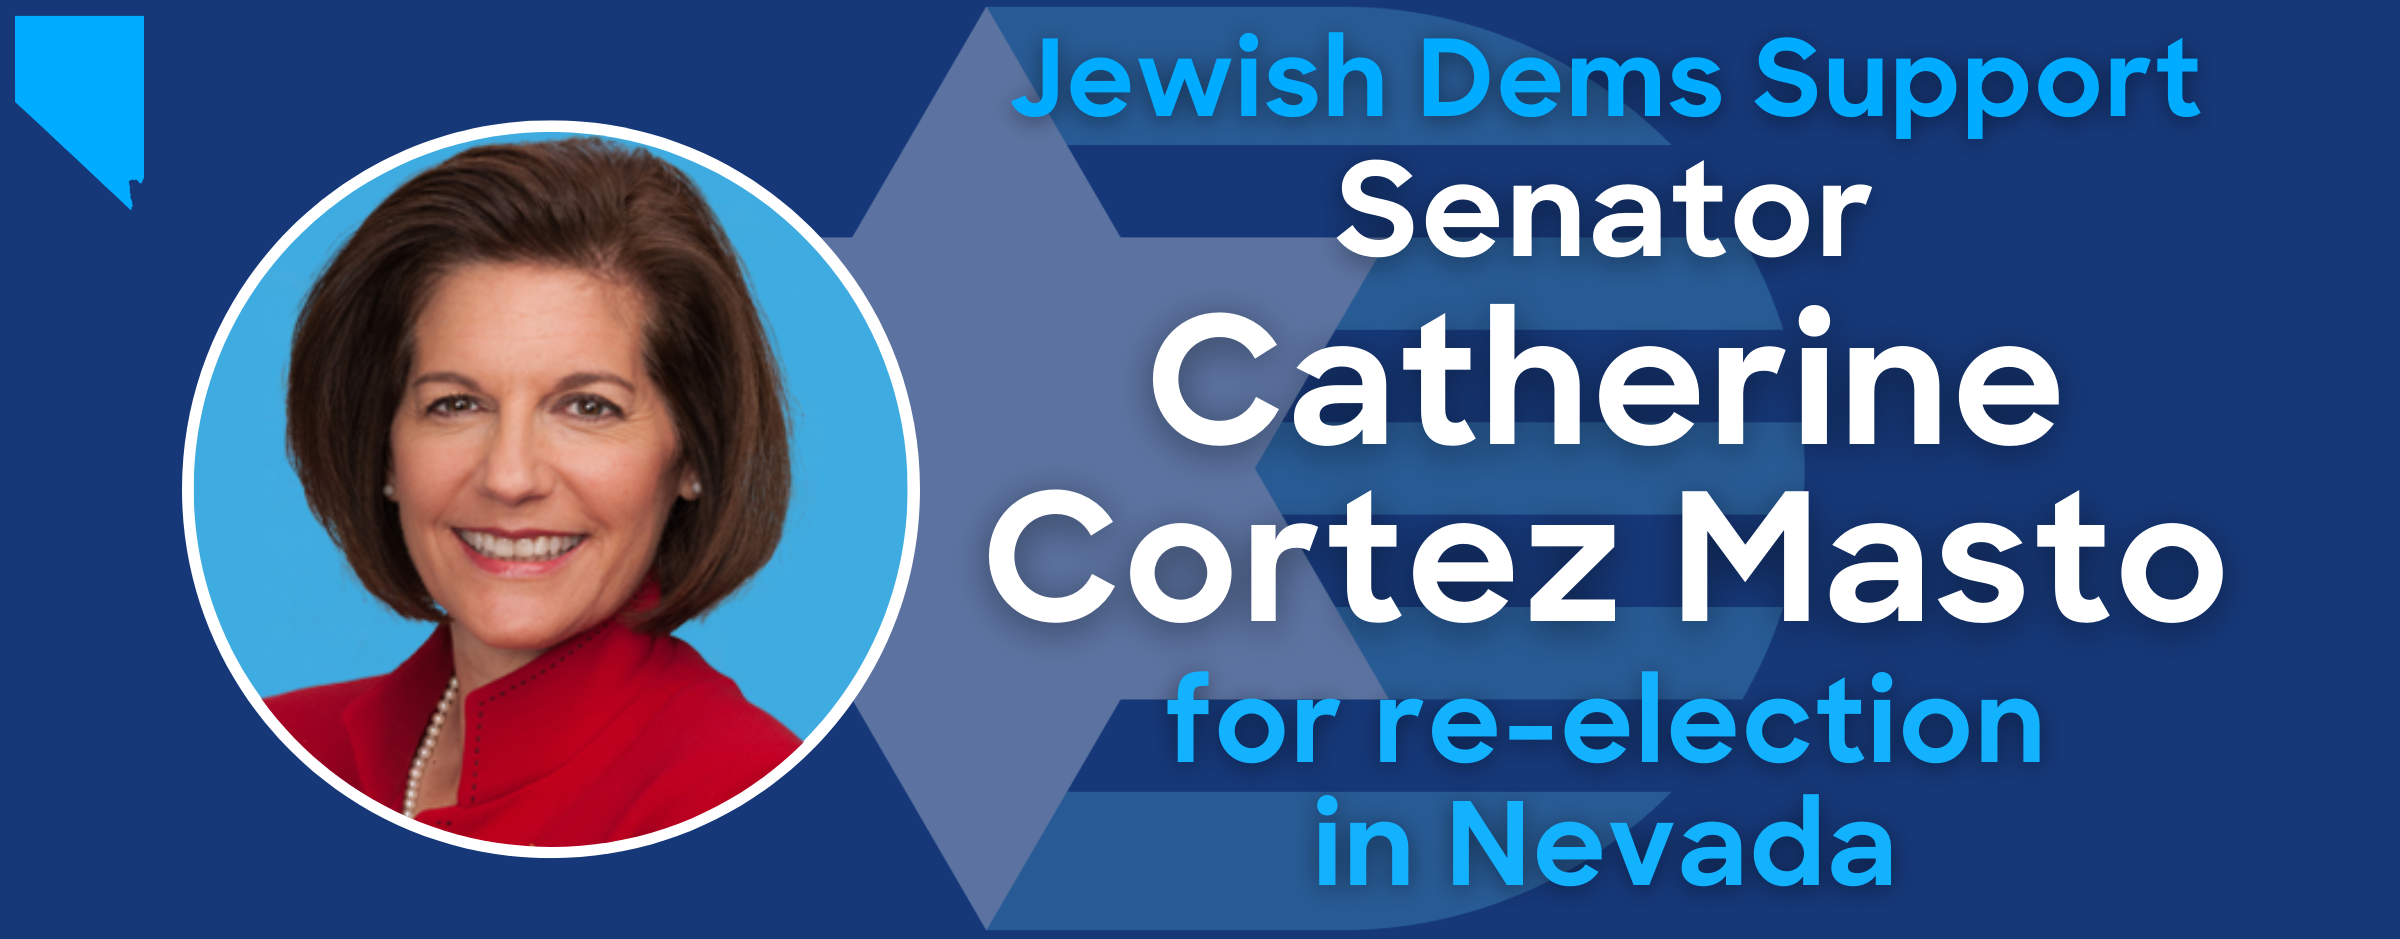 Jewish Dems Support Senator Catherine Cortez Masto for re-election in Nevada.